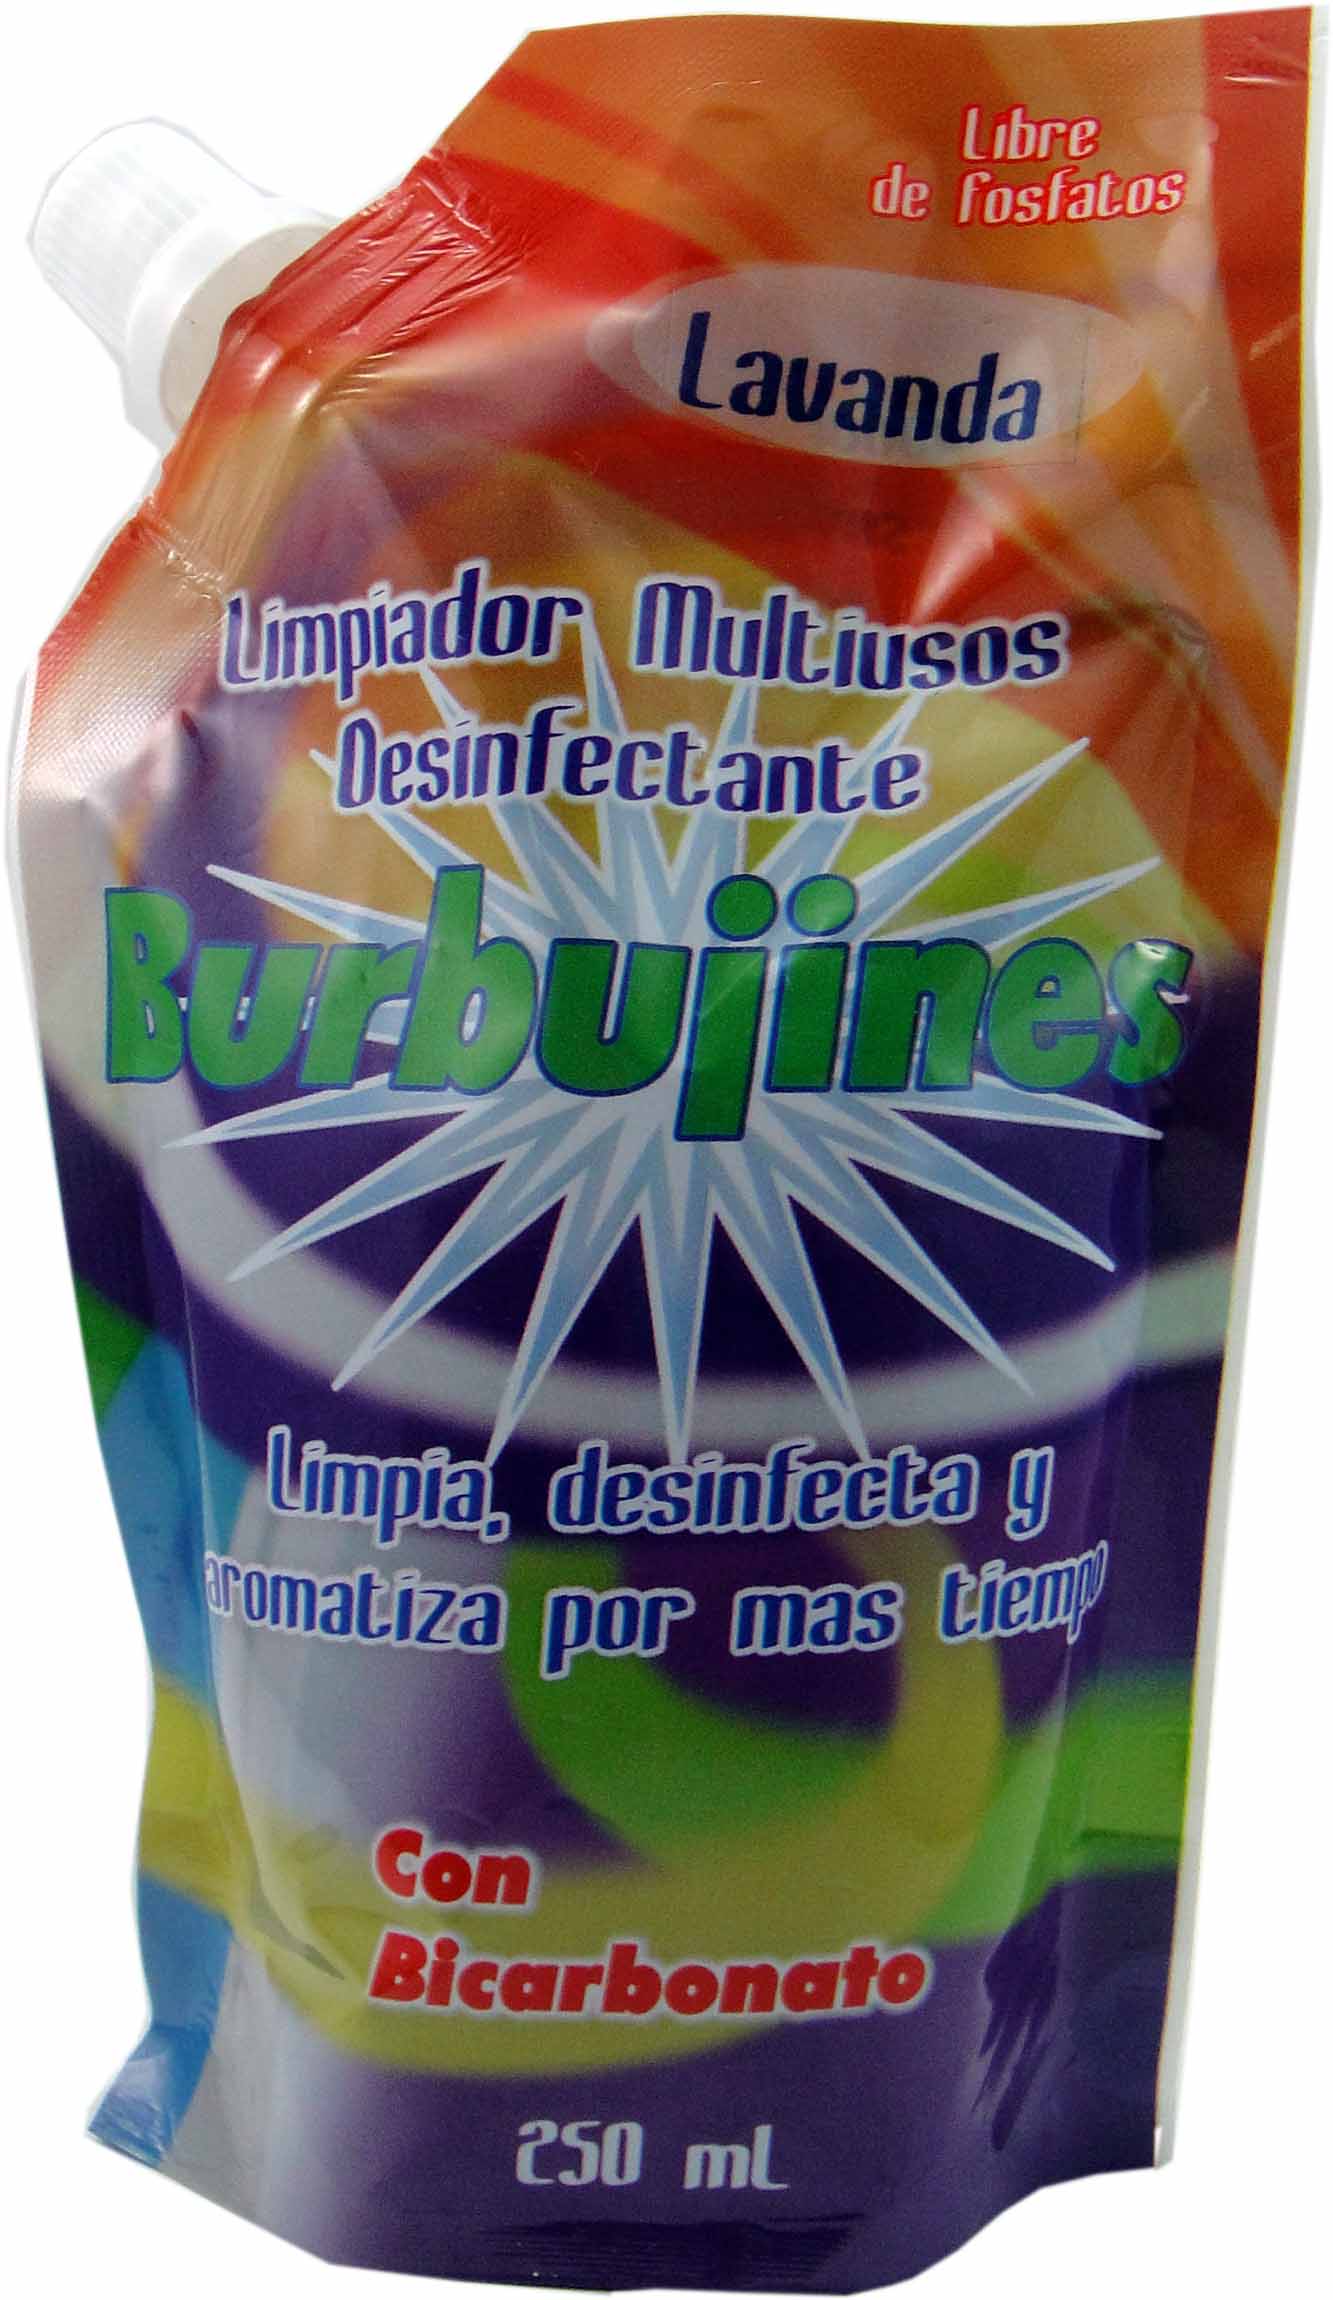 Limpiador Multiusos Desinfectante Burbujines